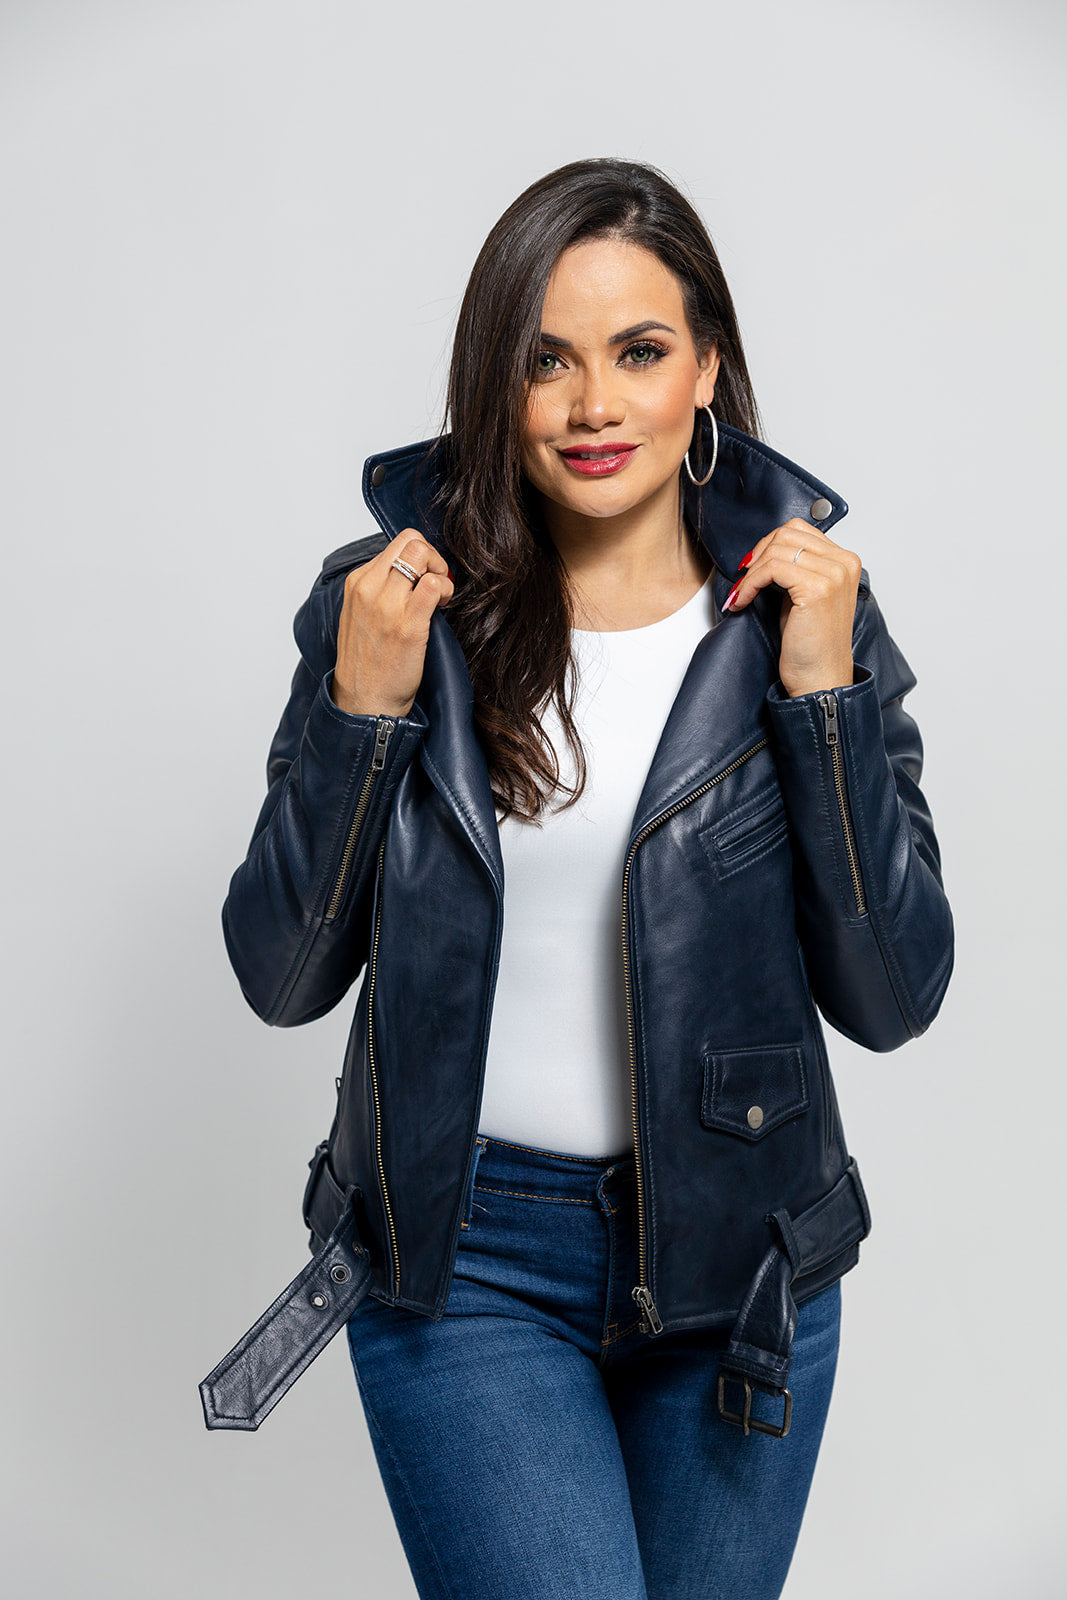 Rebel Women's Leather Jacket Navy Blue (POS) Women's Leather Jacket Whet Blu NYC   